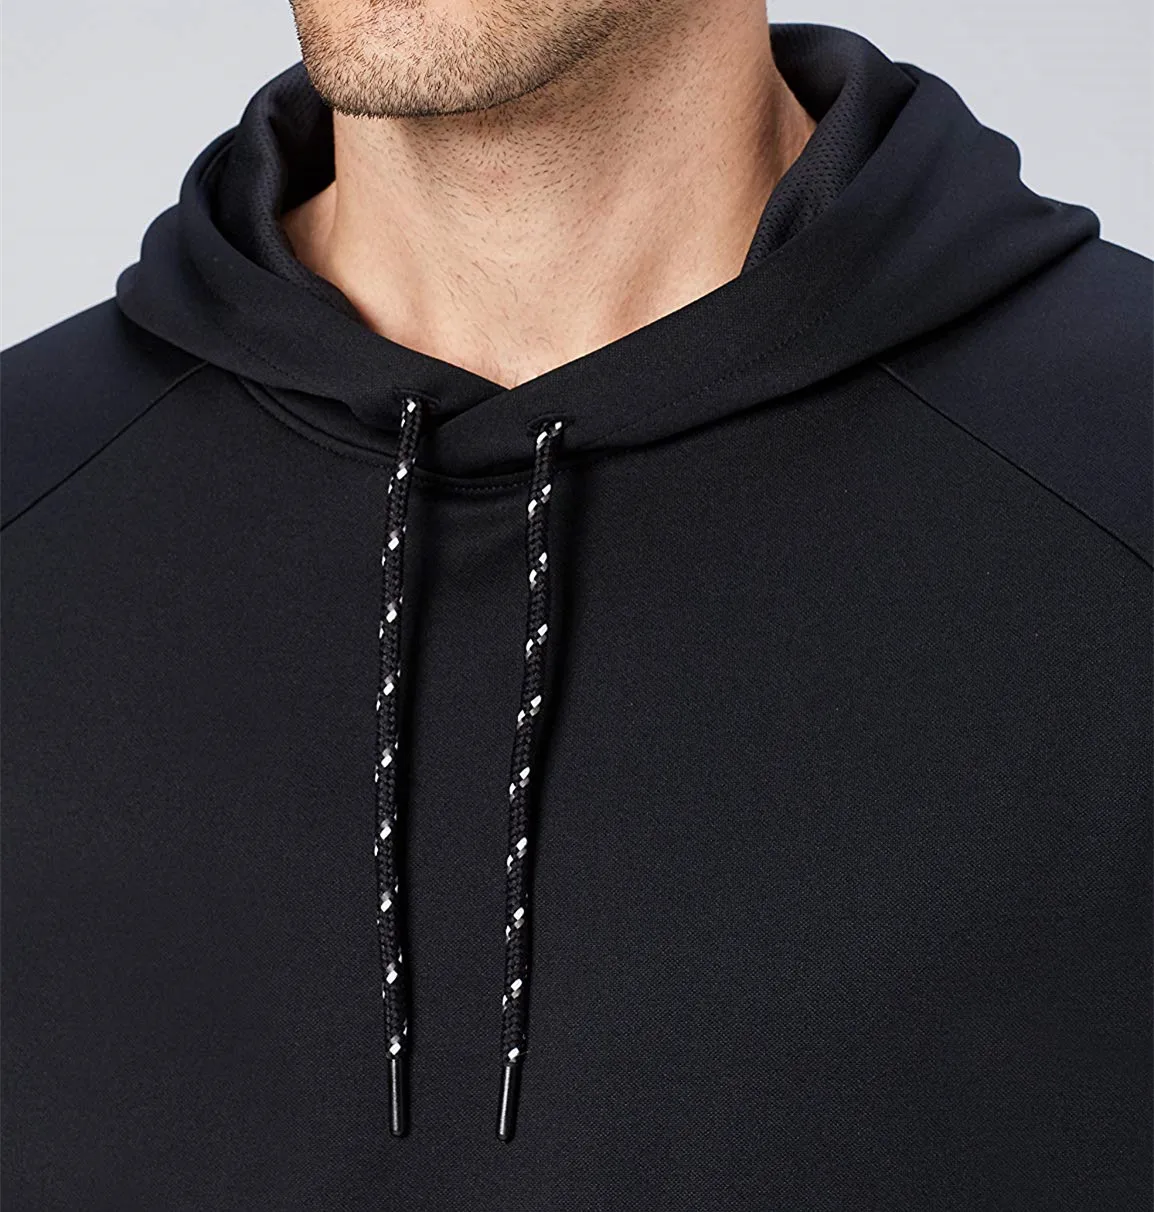 Oem 100% Polyester Fleece Pullover Hoodies For Men Lifestyle Wear Black ...